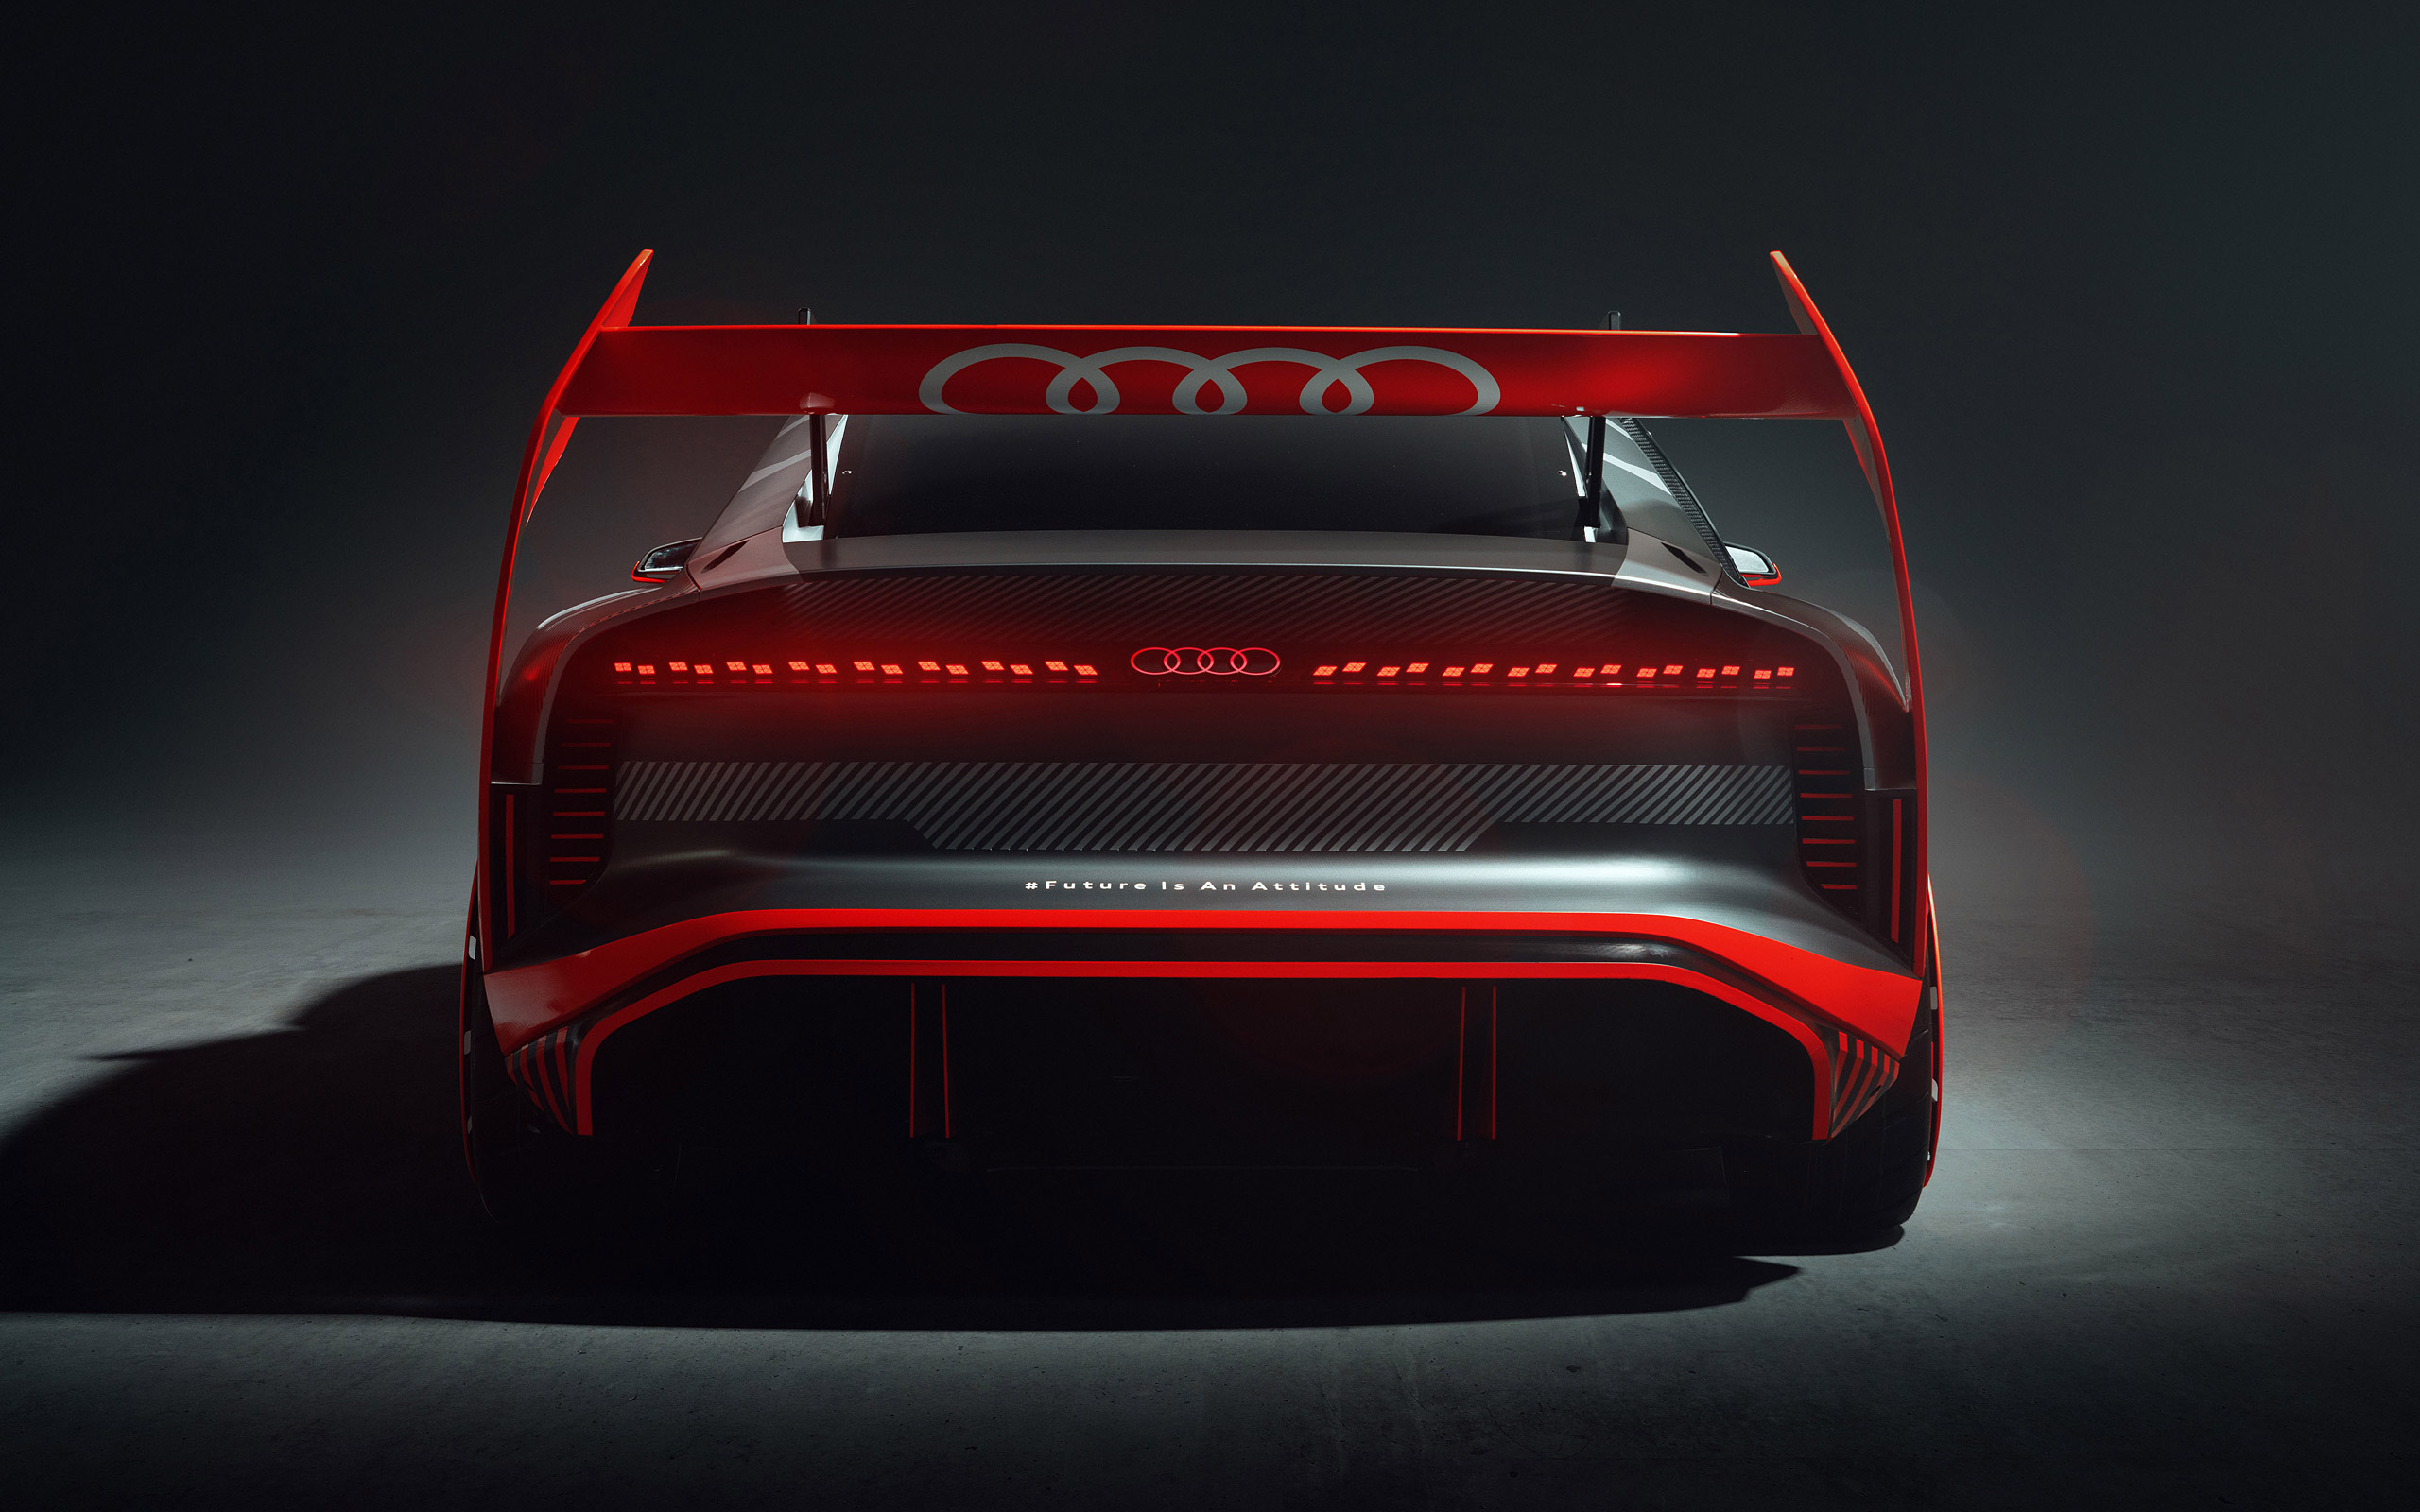  2021 Audi S1 Hoonitron Concept Wallpaper.